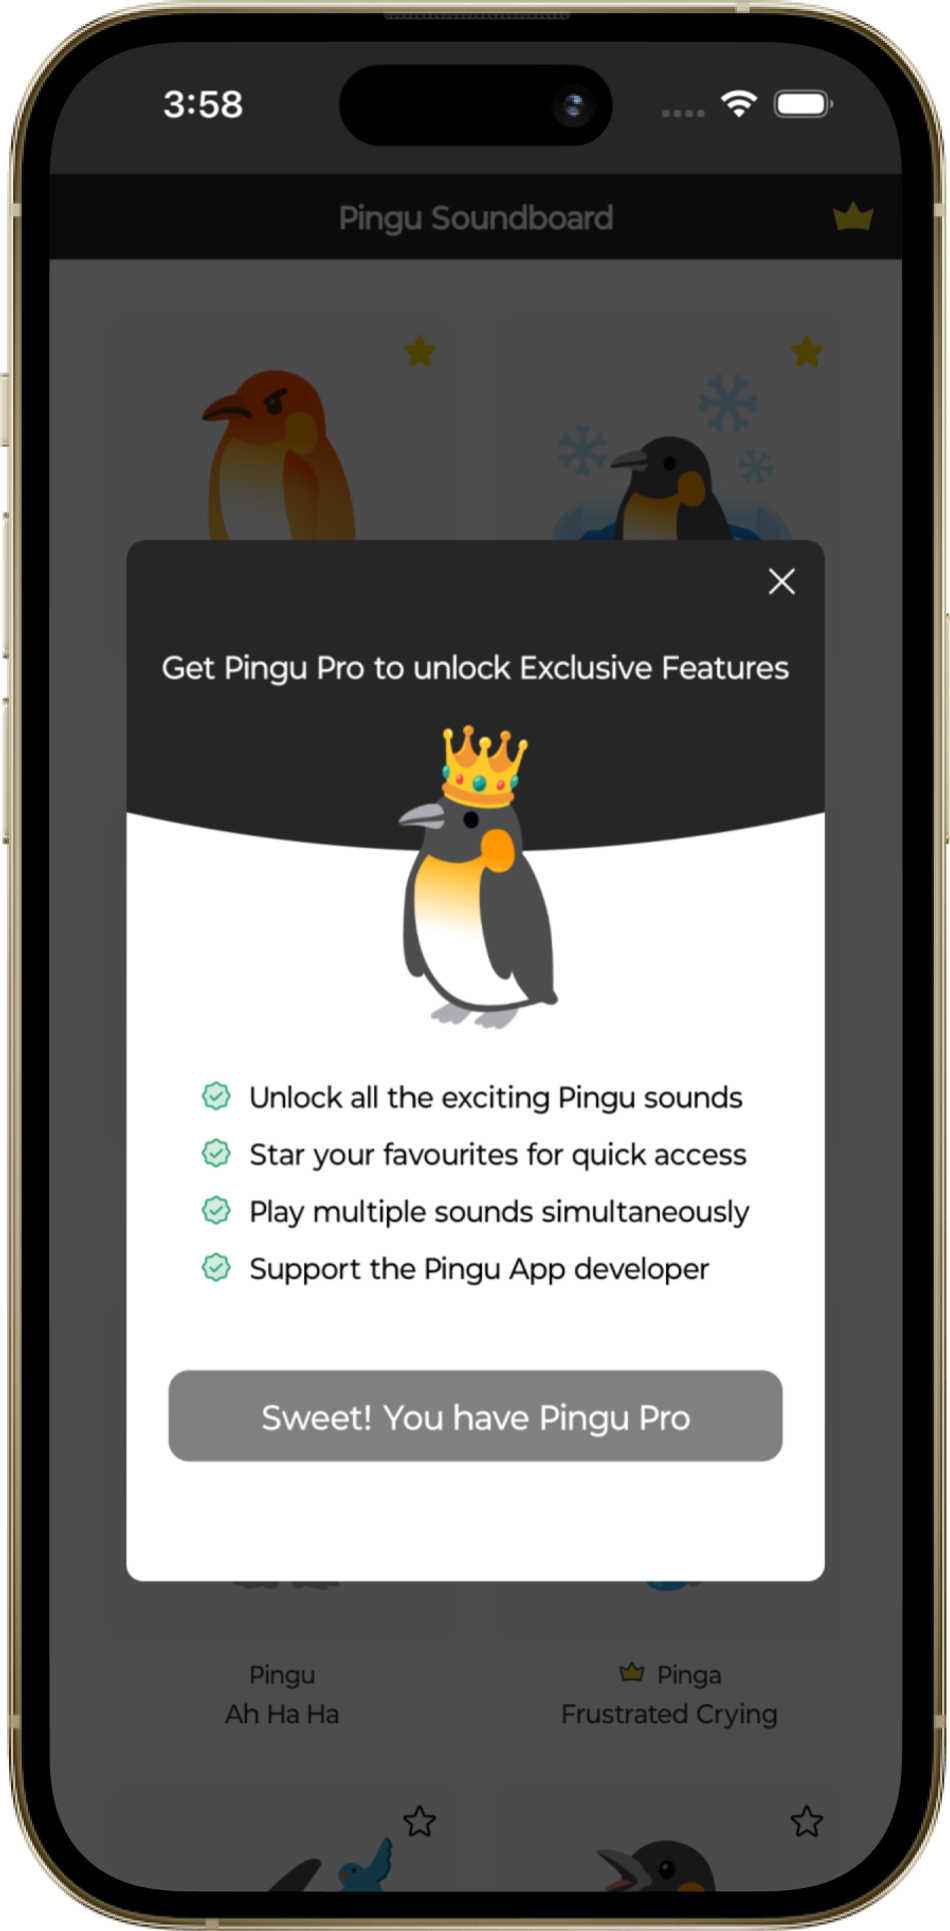 Unleash more Pingus with Pingu Pro